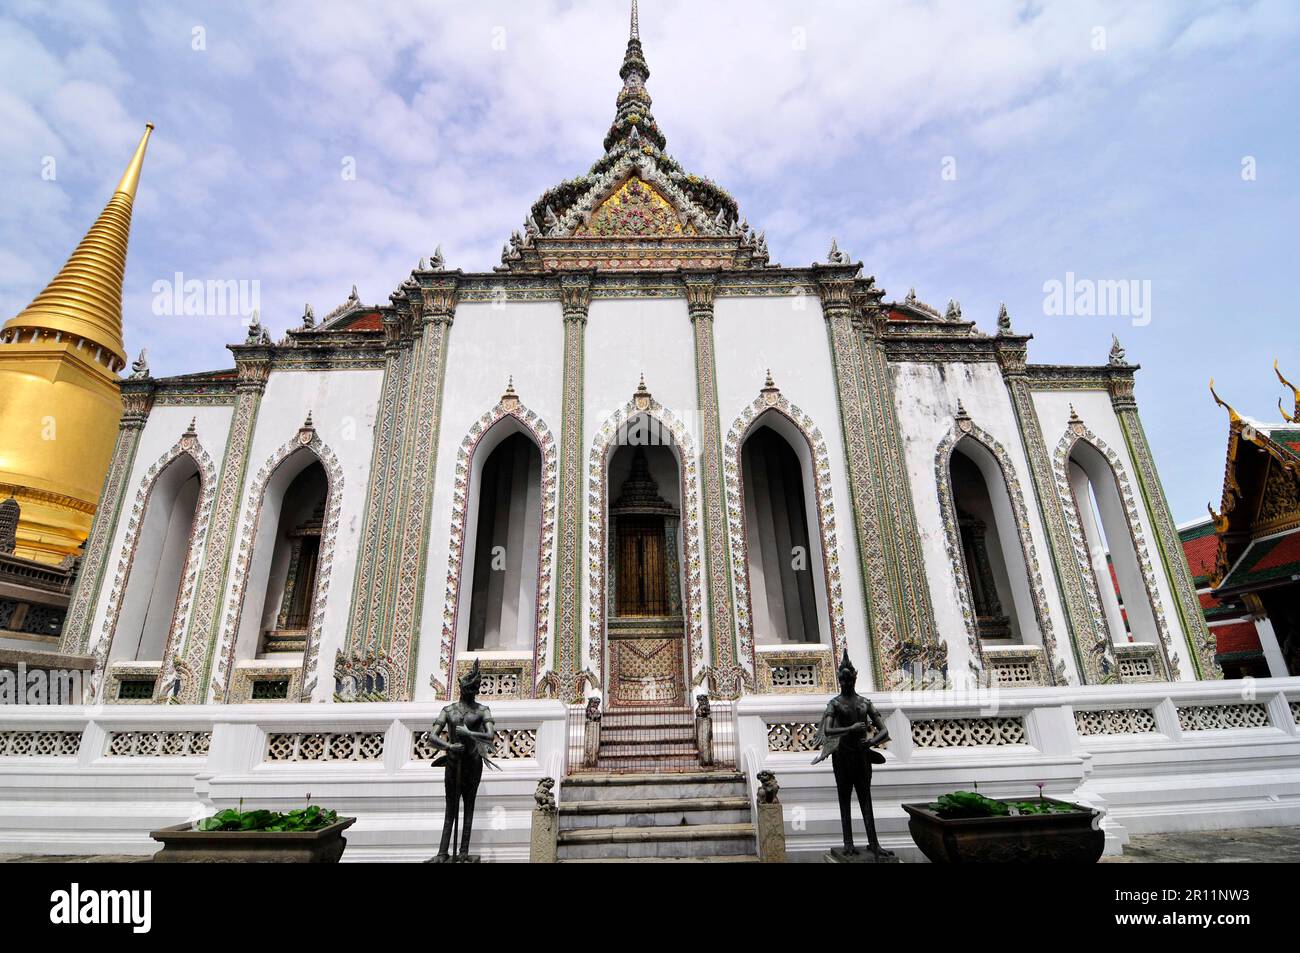 Phra Wiharn Yod tempio buddista al Grand Palace di Bangkok, Thailandia. Foto Stock